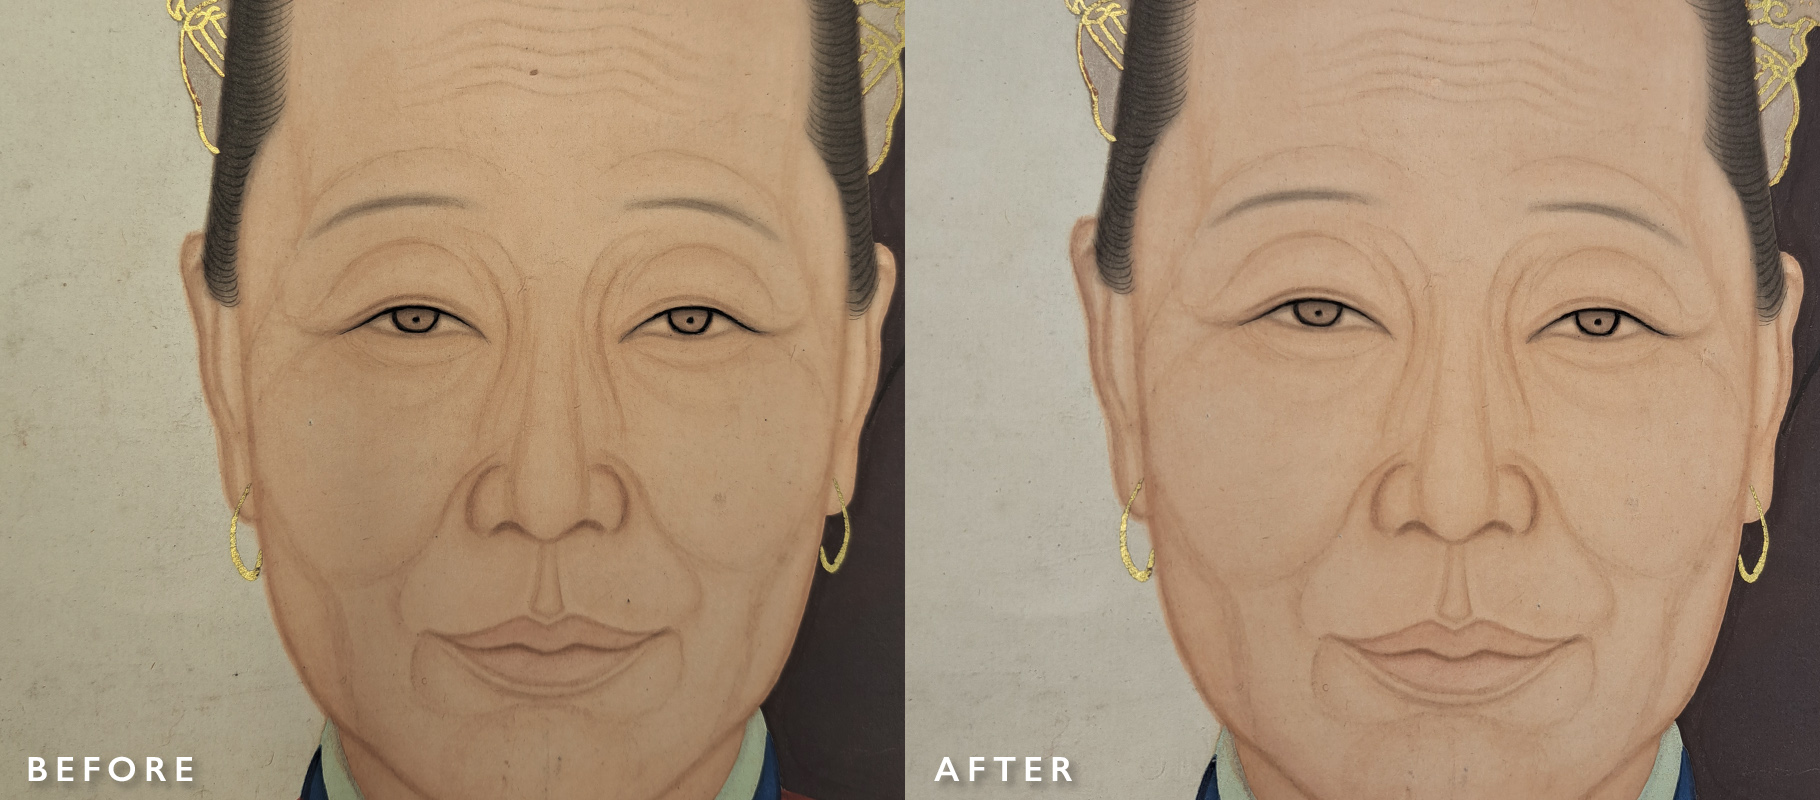 Chinese portrait restoration face